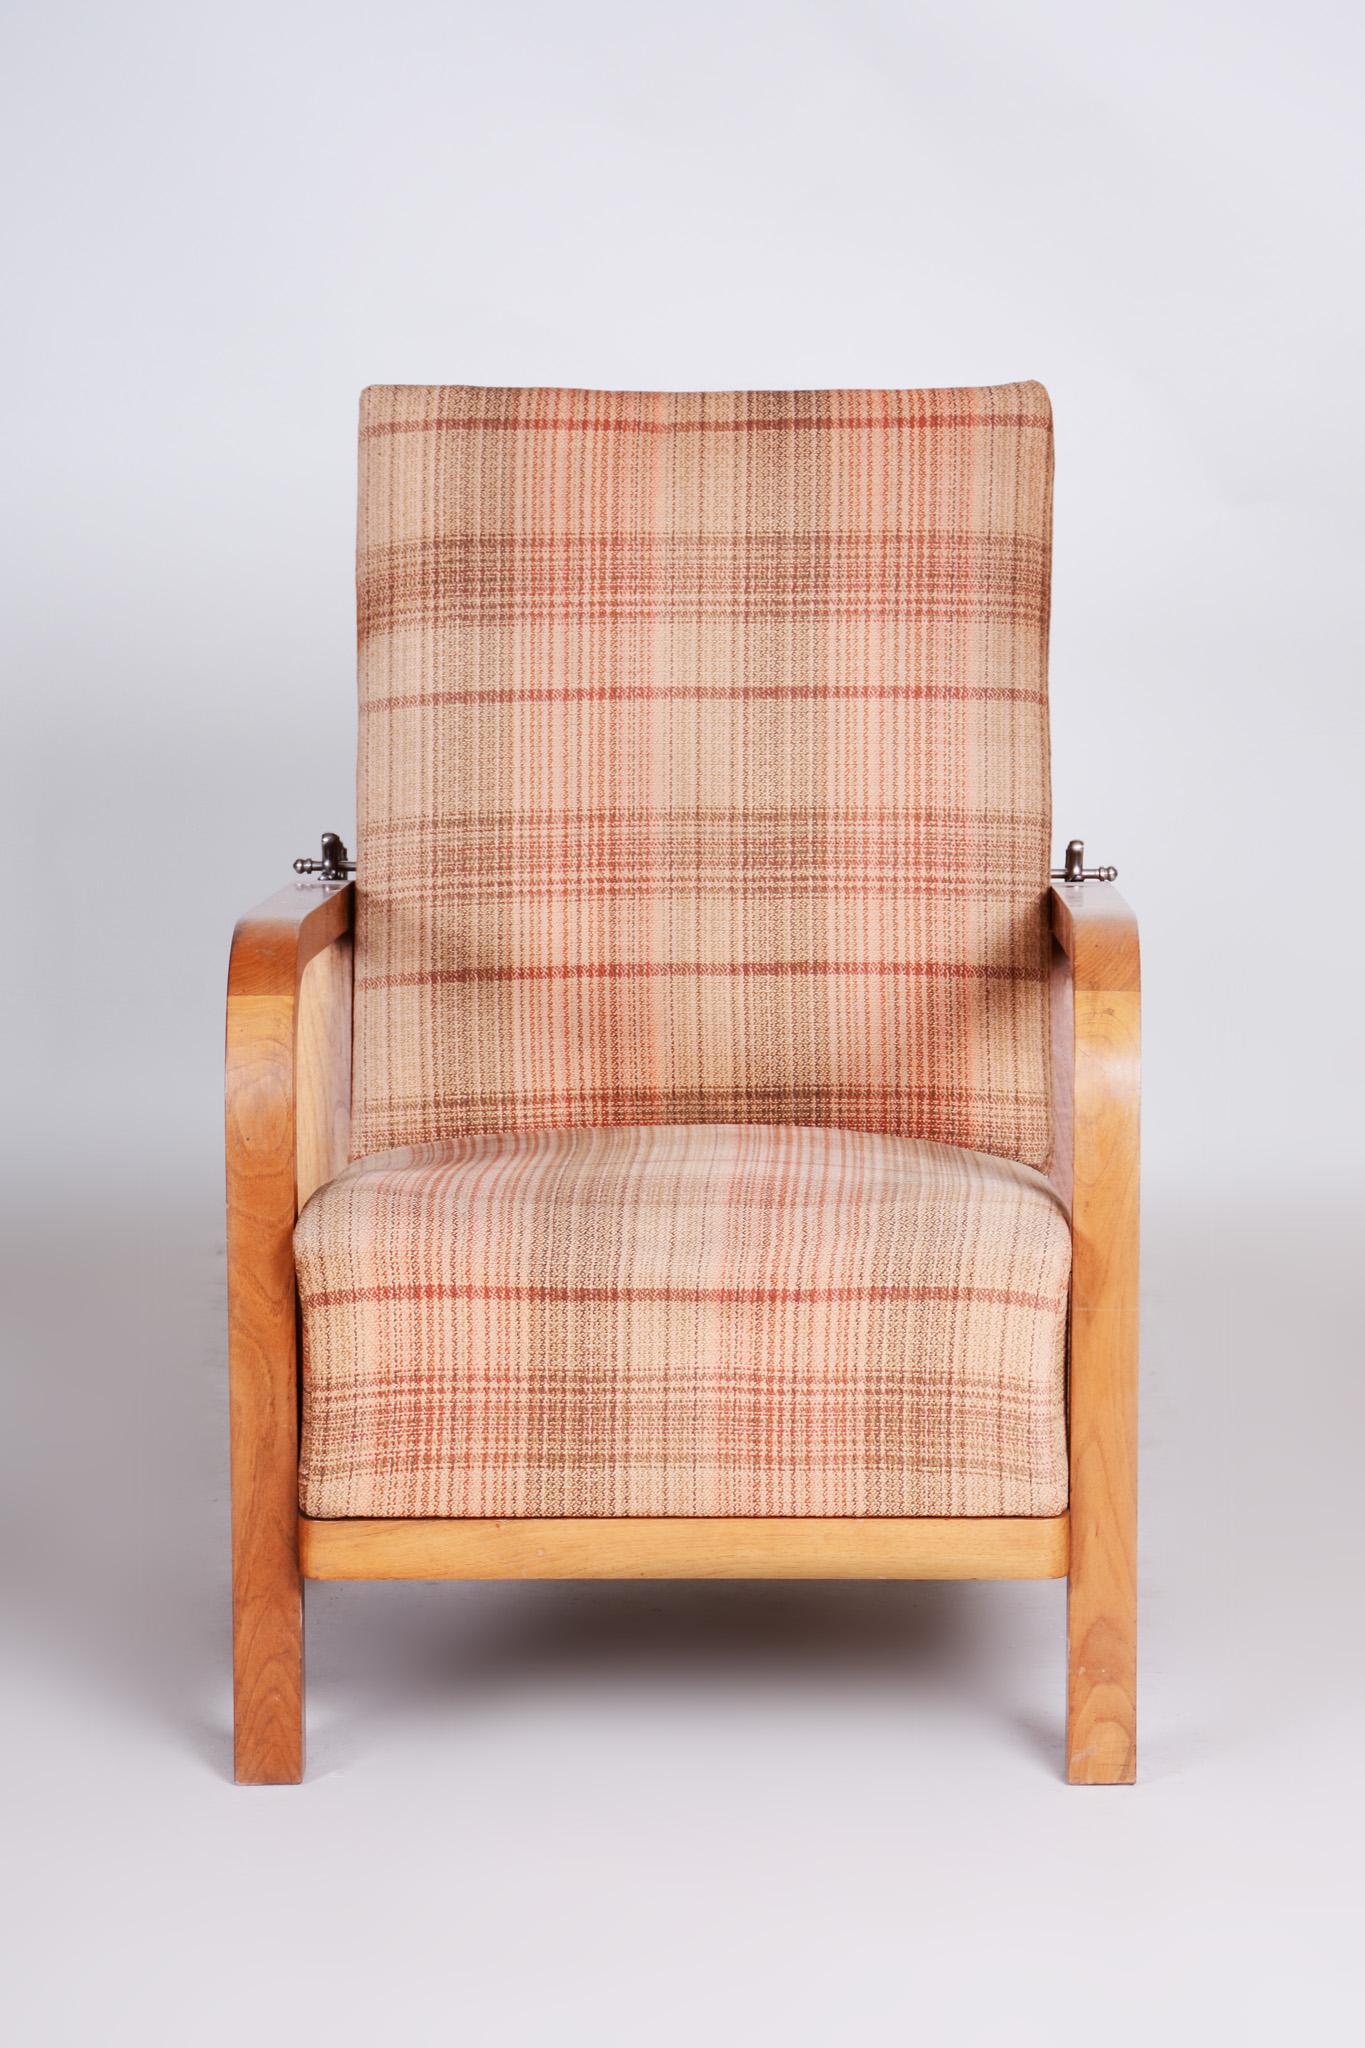 Czech Art Deco chair
Material: Walnut
Period: 1930-1939
Perfect original condition.